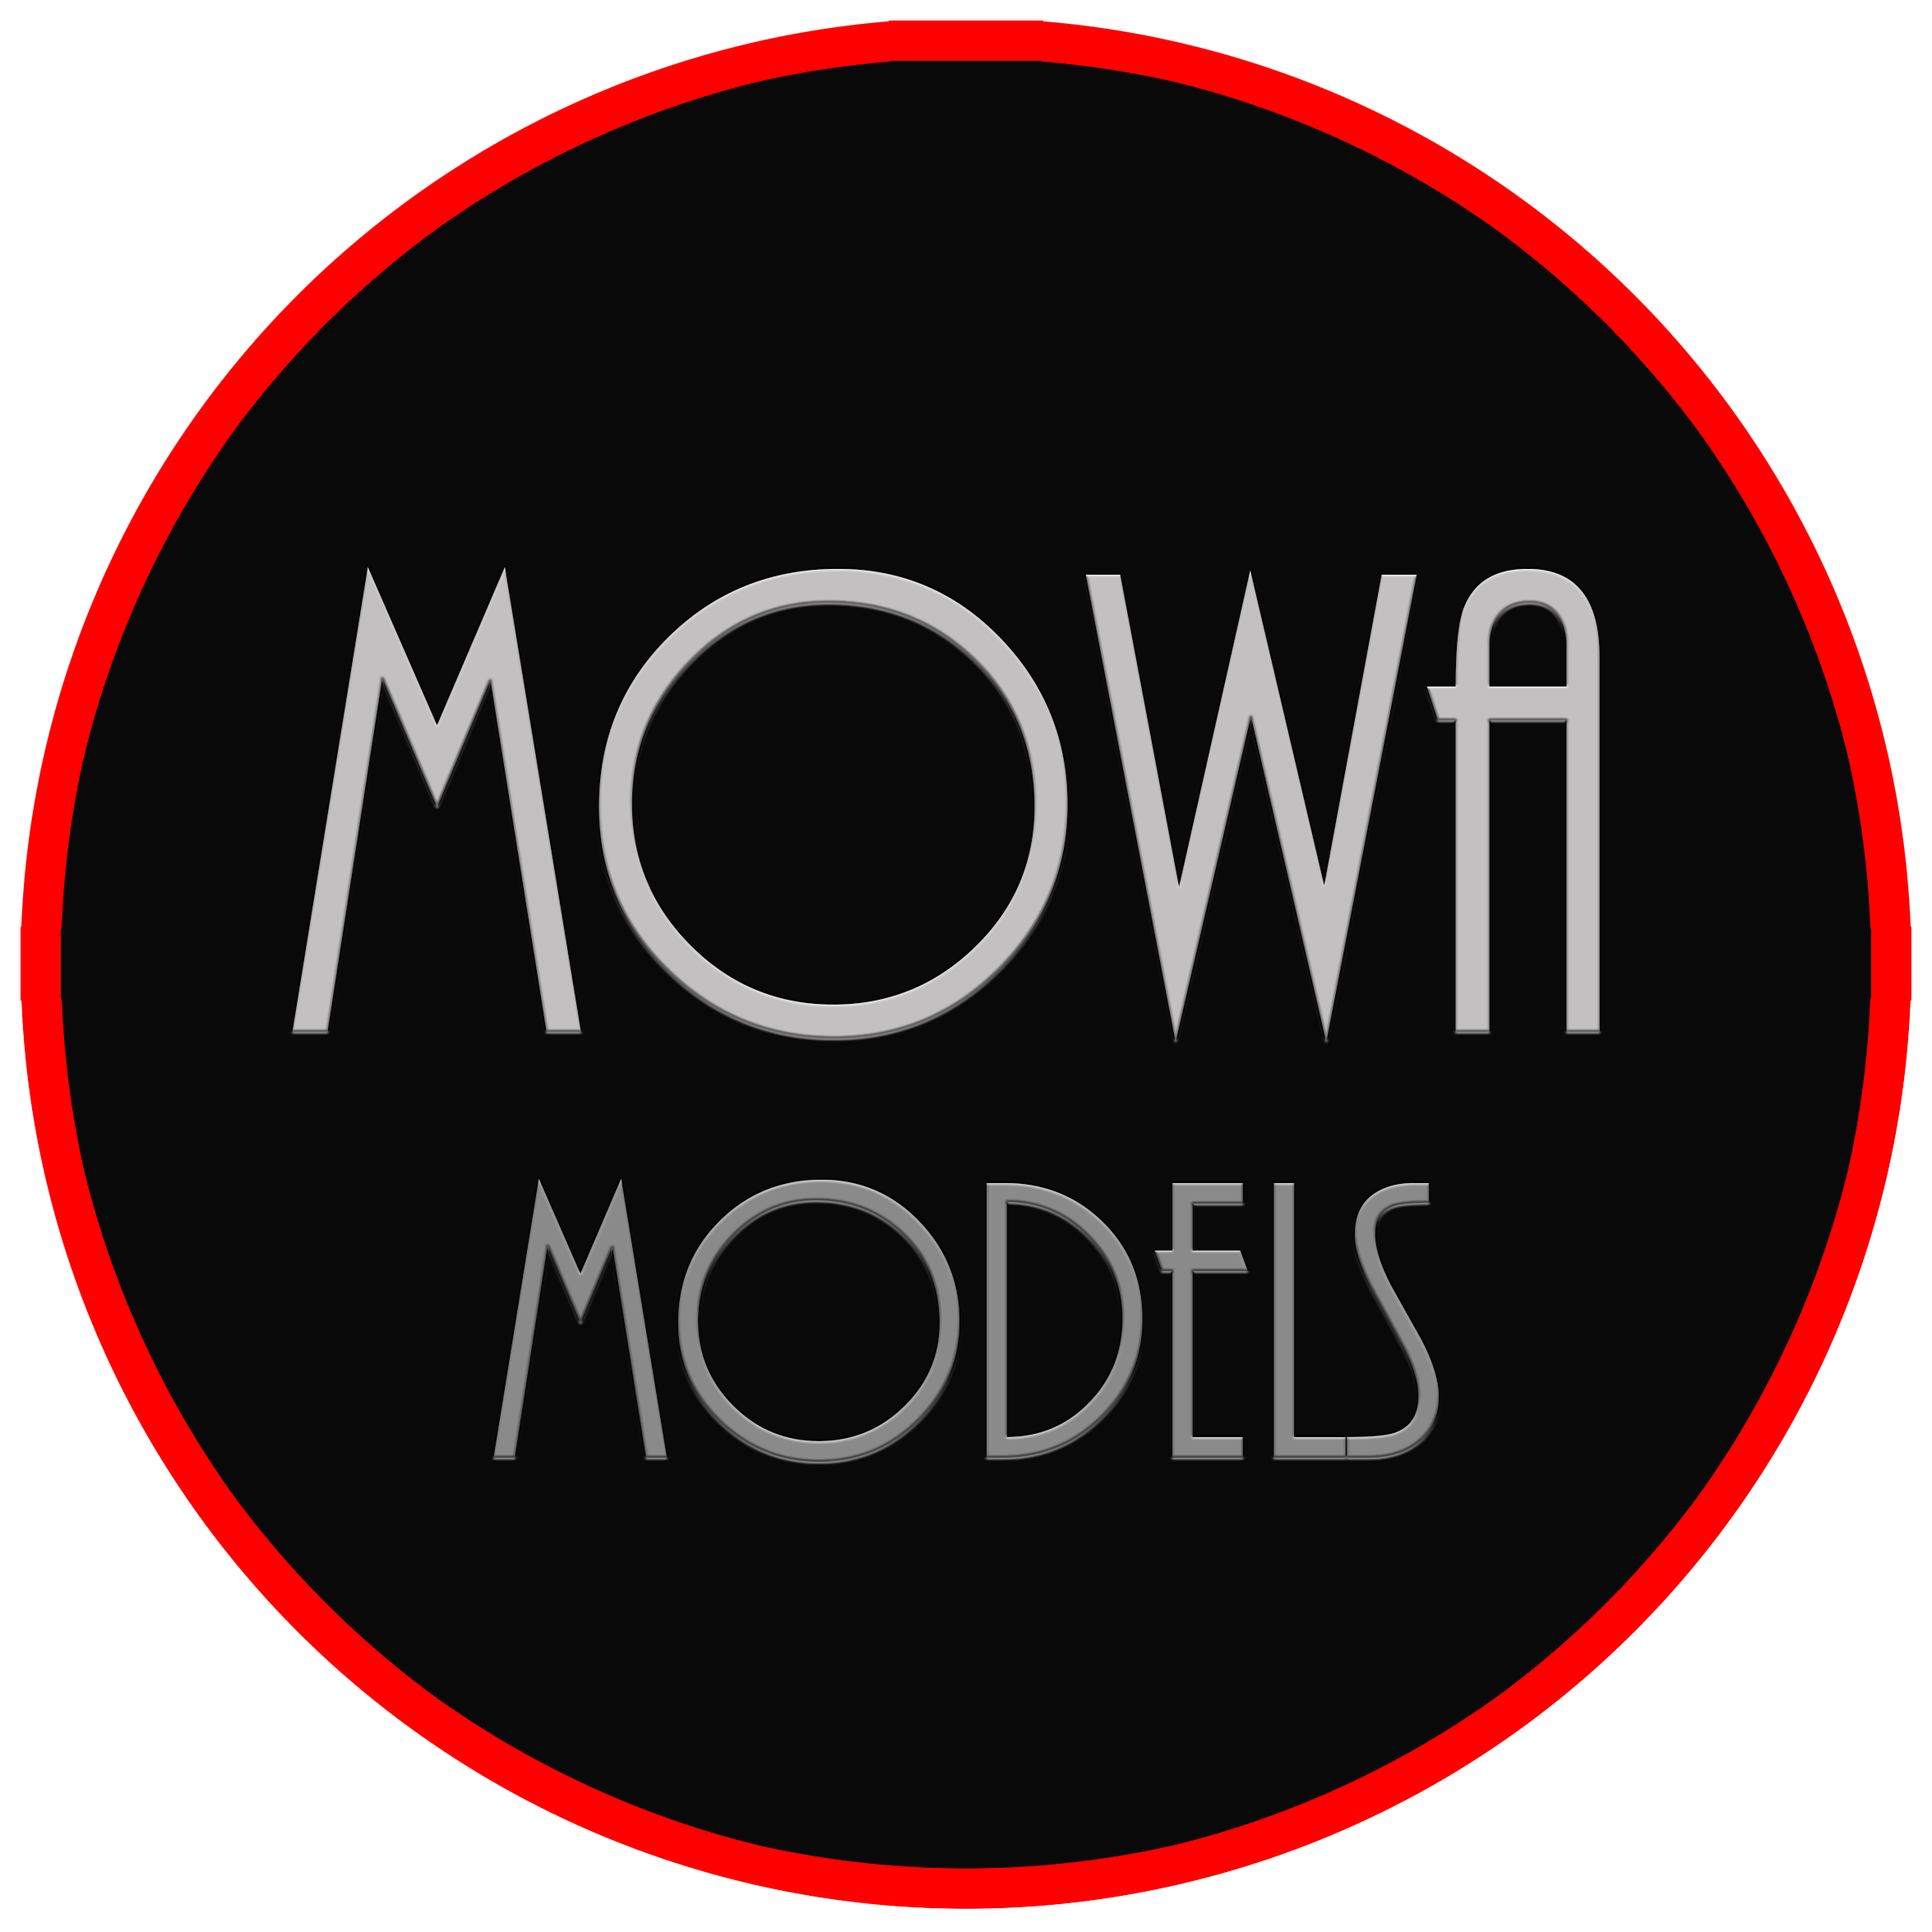 Gesponsord door modellenbureau Mowa Models.